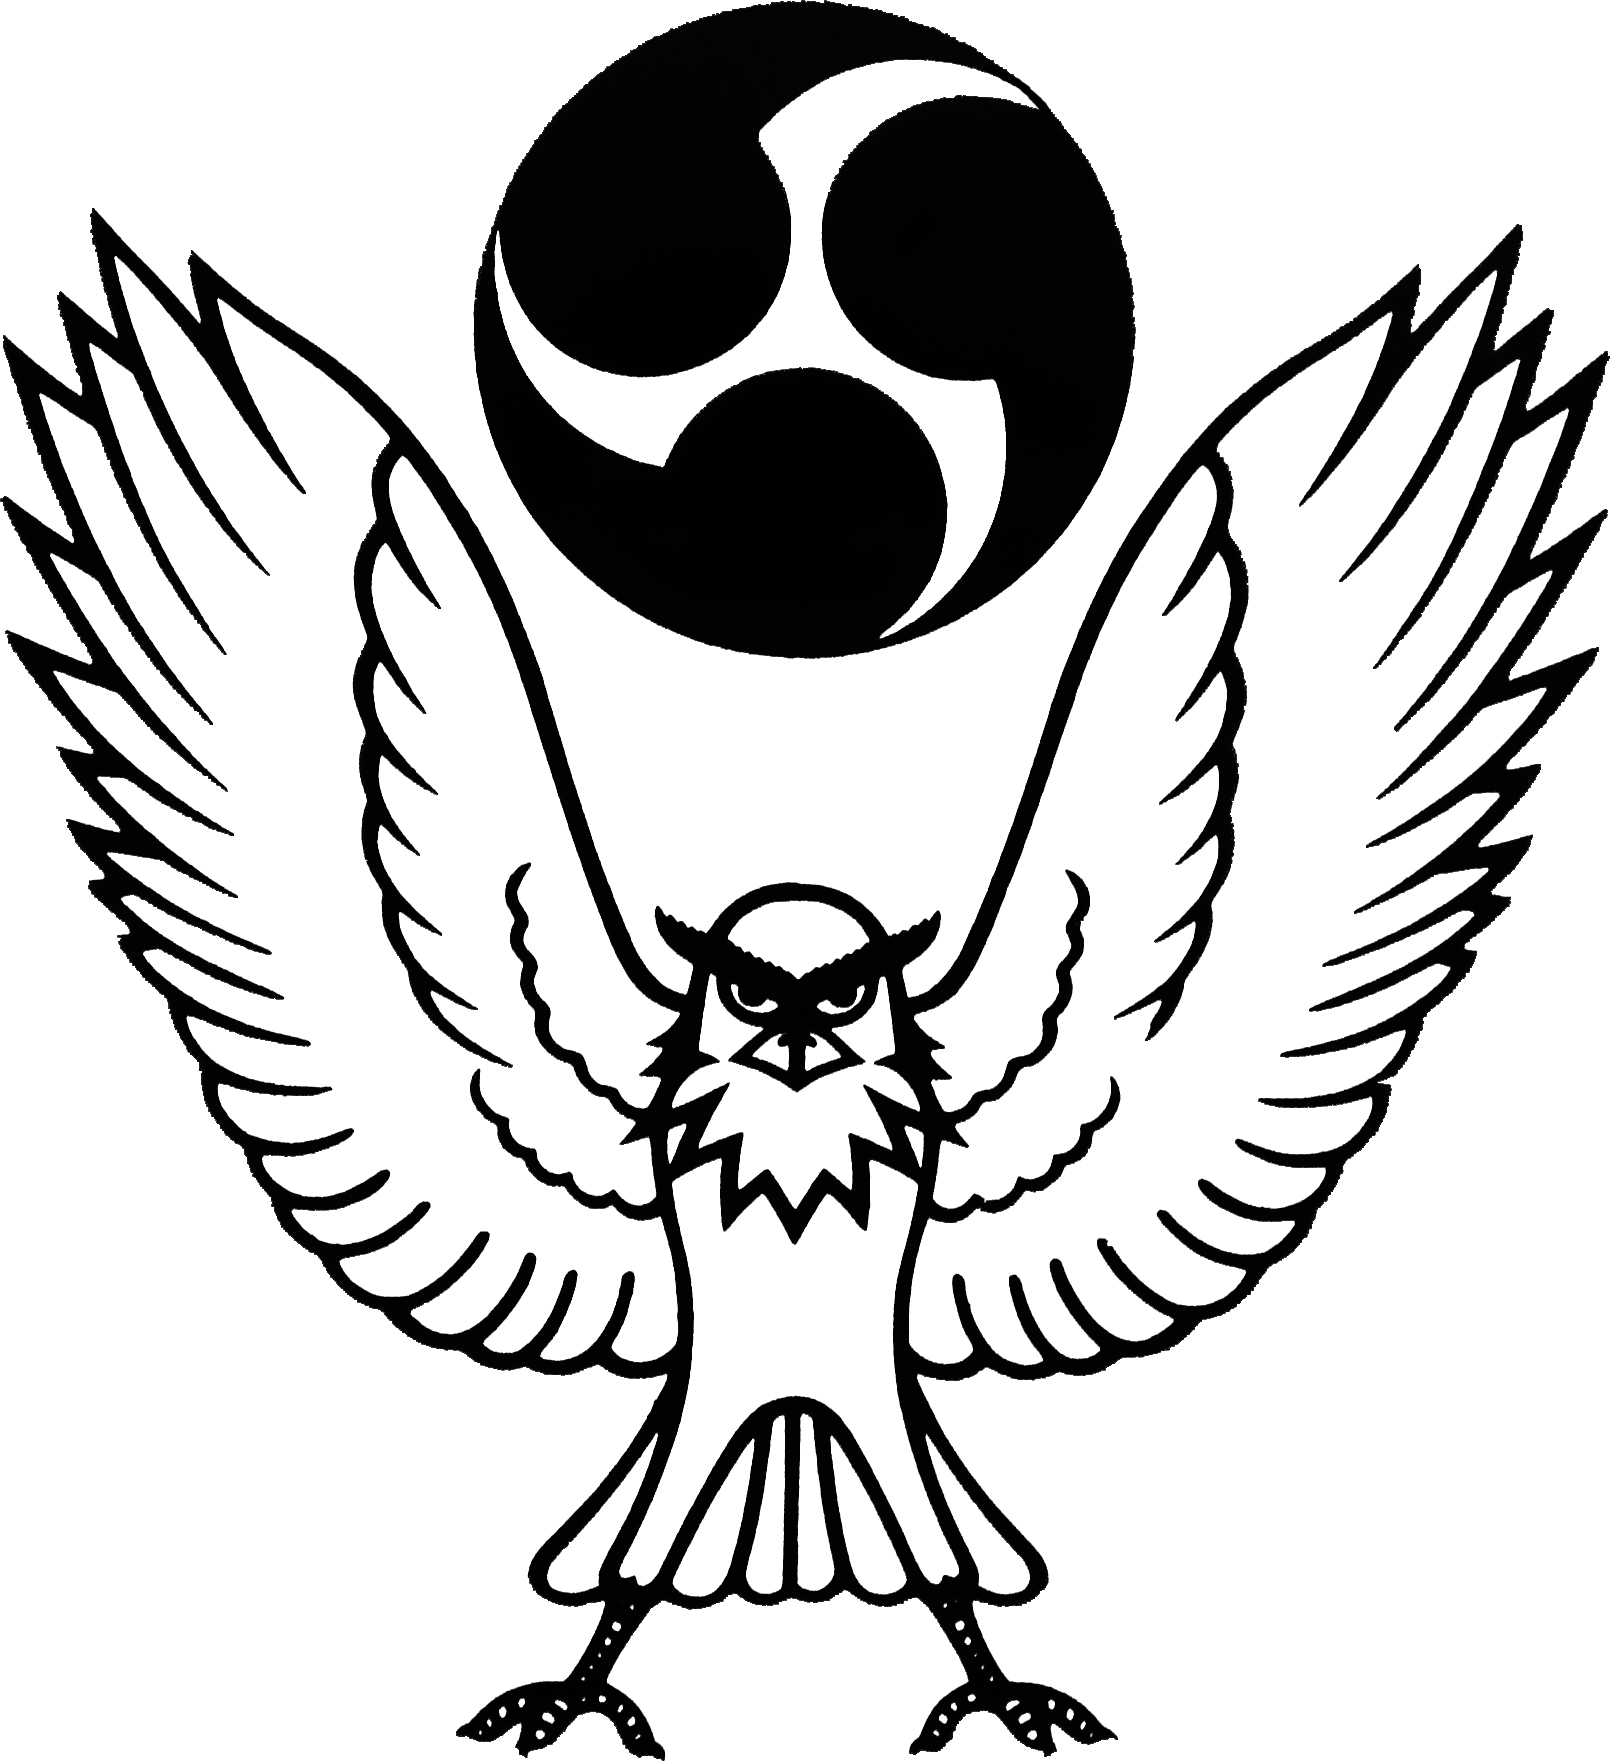 Shinto symbol | oki yo!